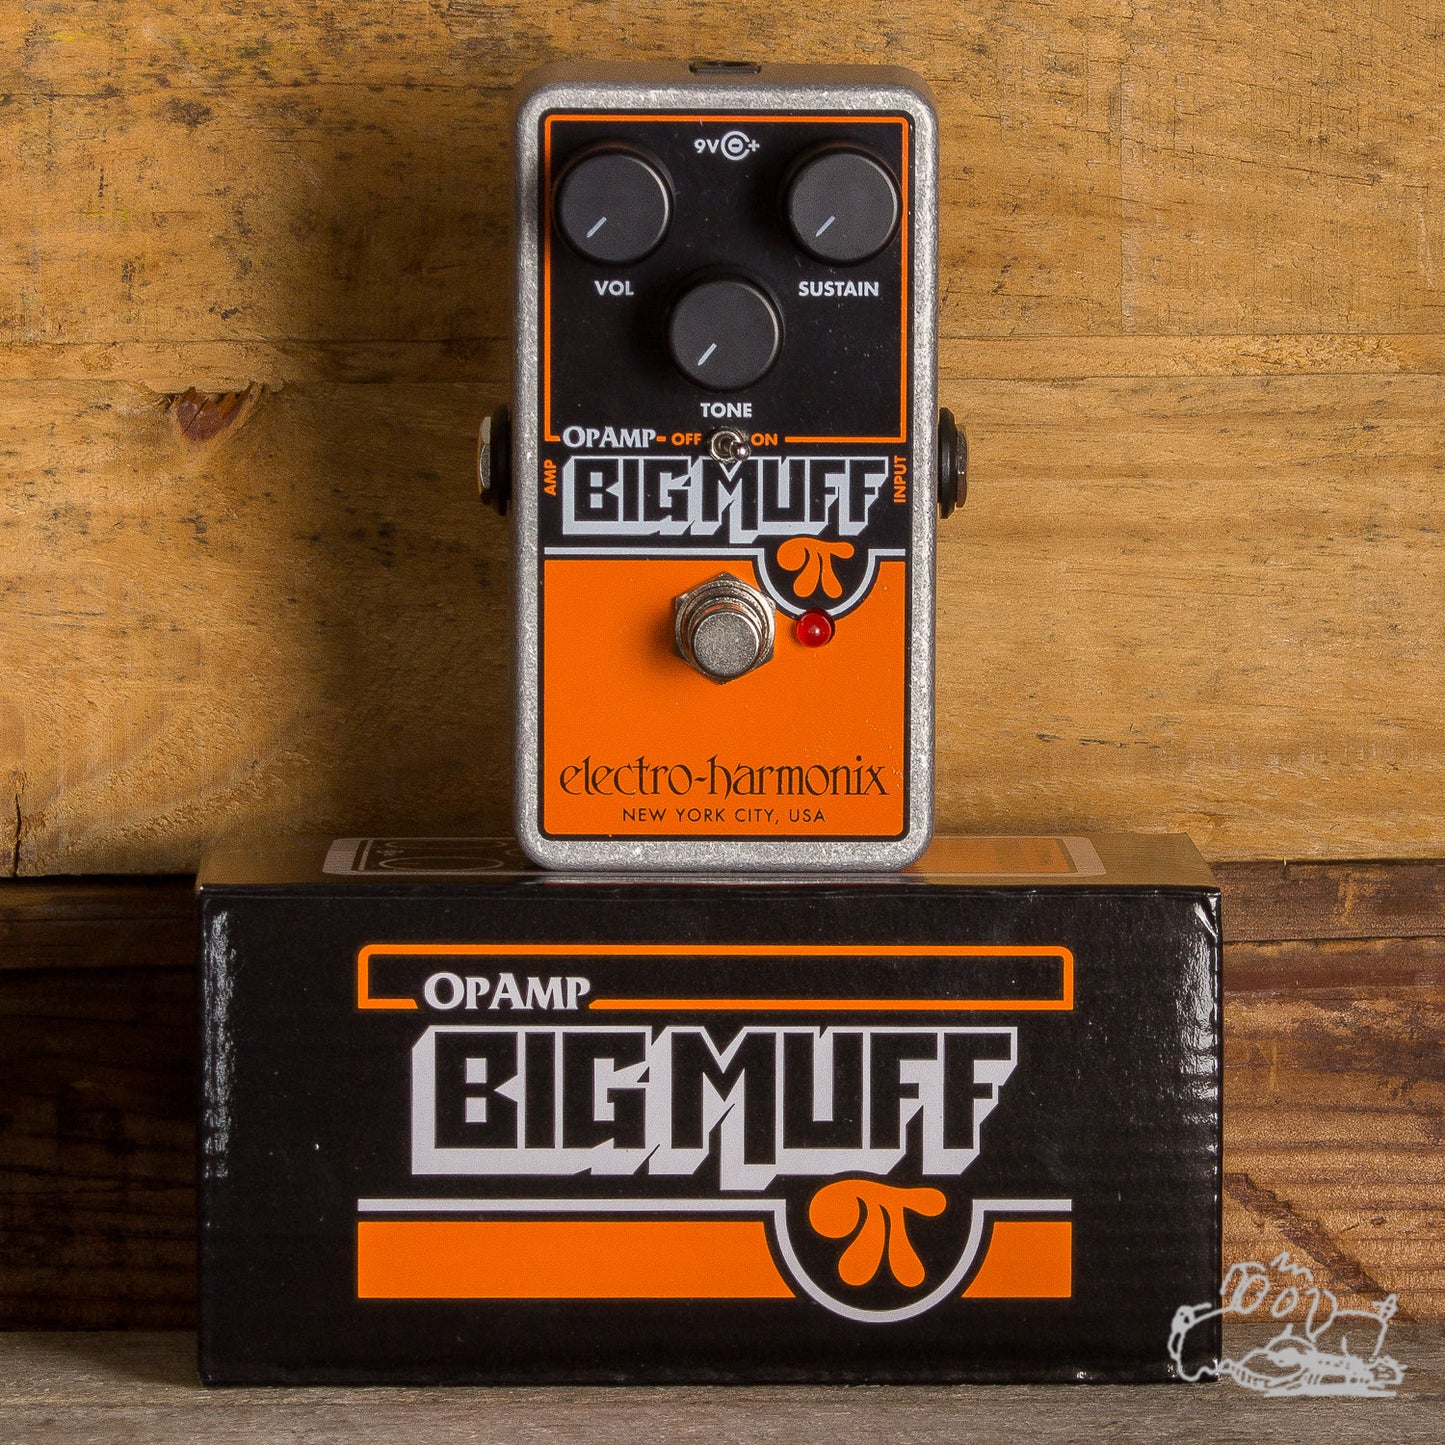 Electro-Harmonix Op-amp Big Muff Pi